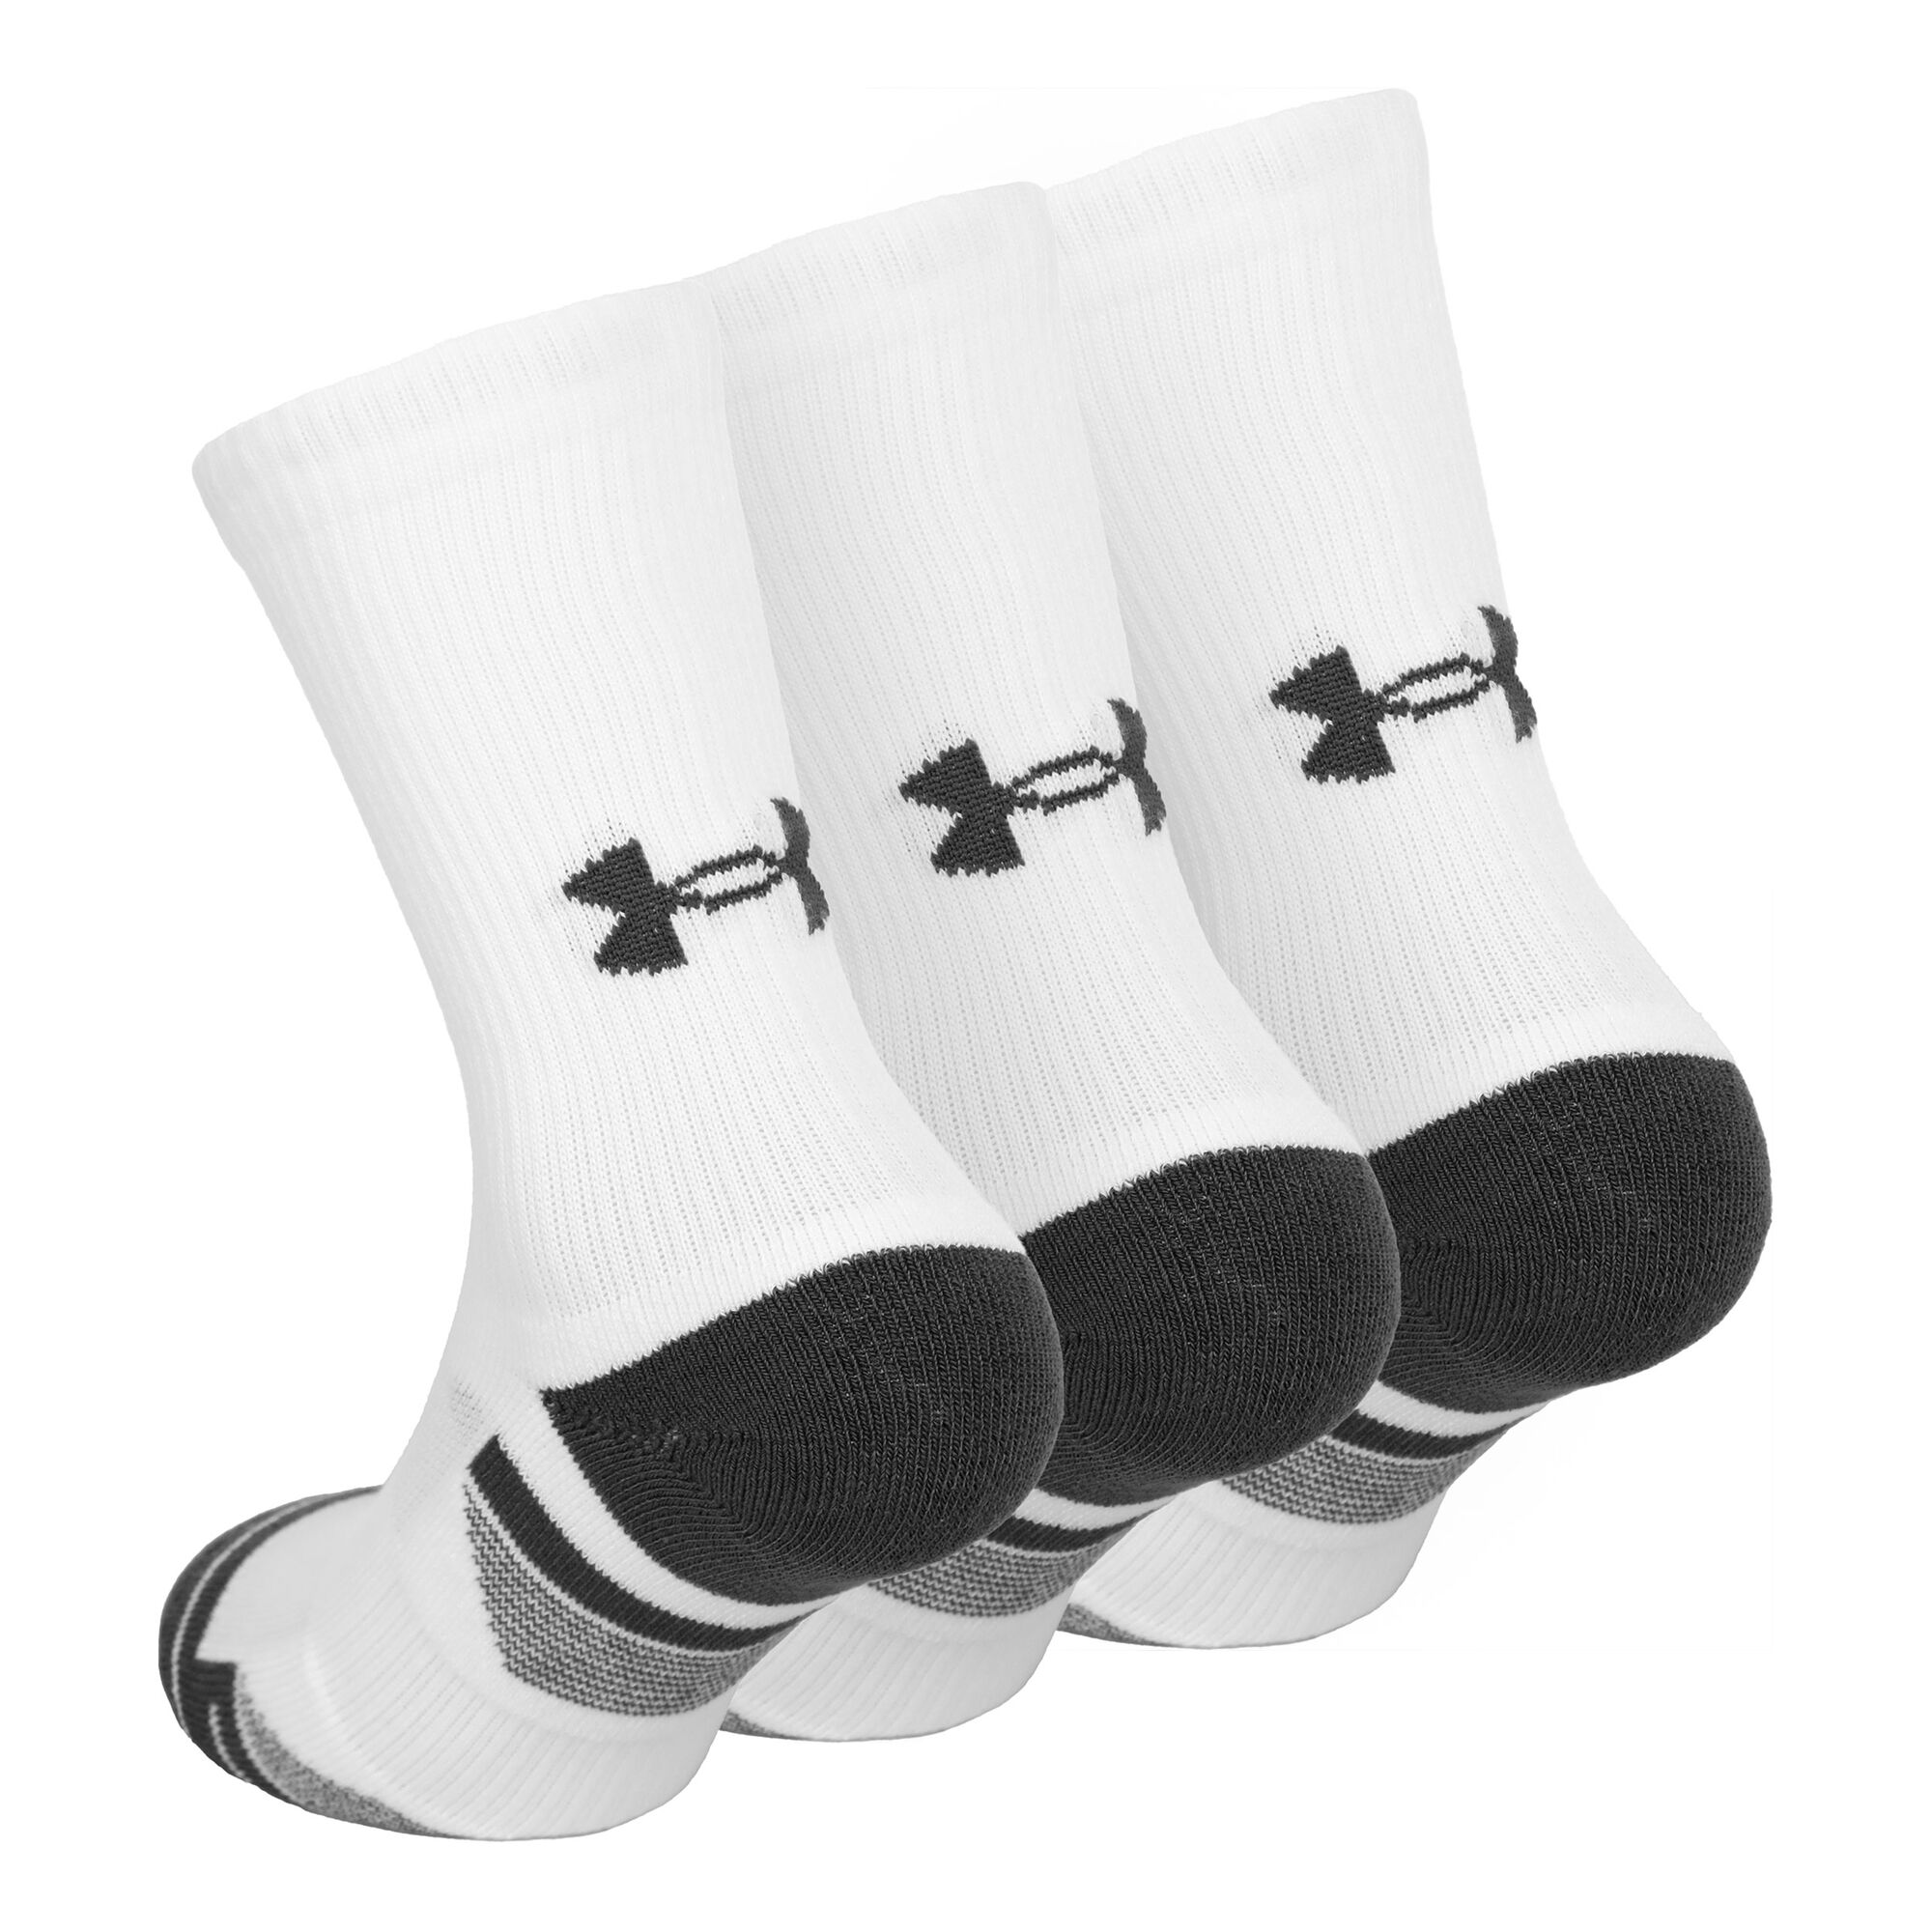 Buy Under Armour Performance Tech Crew Sports Socks White online